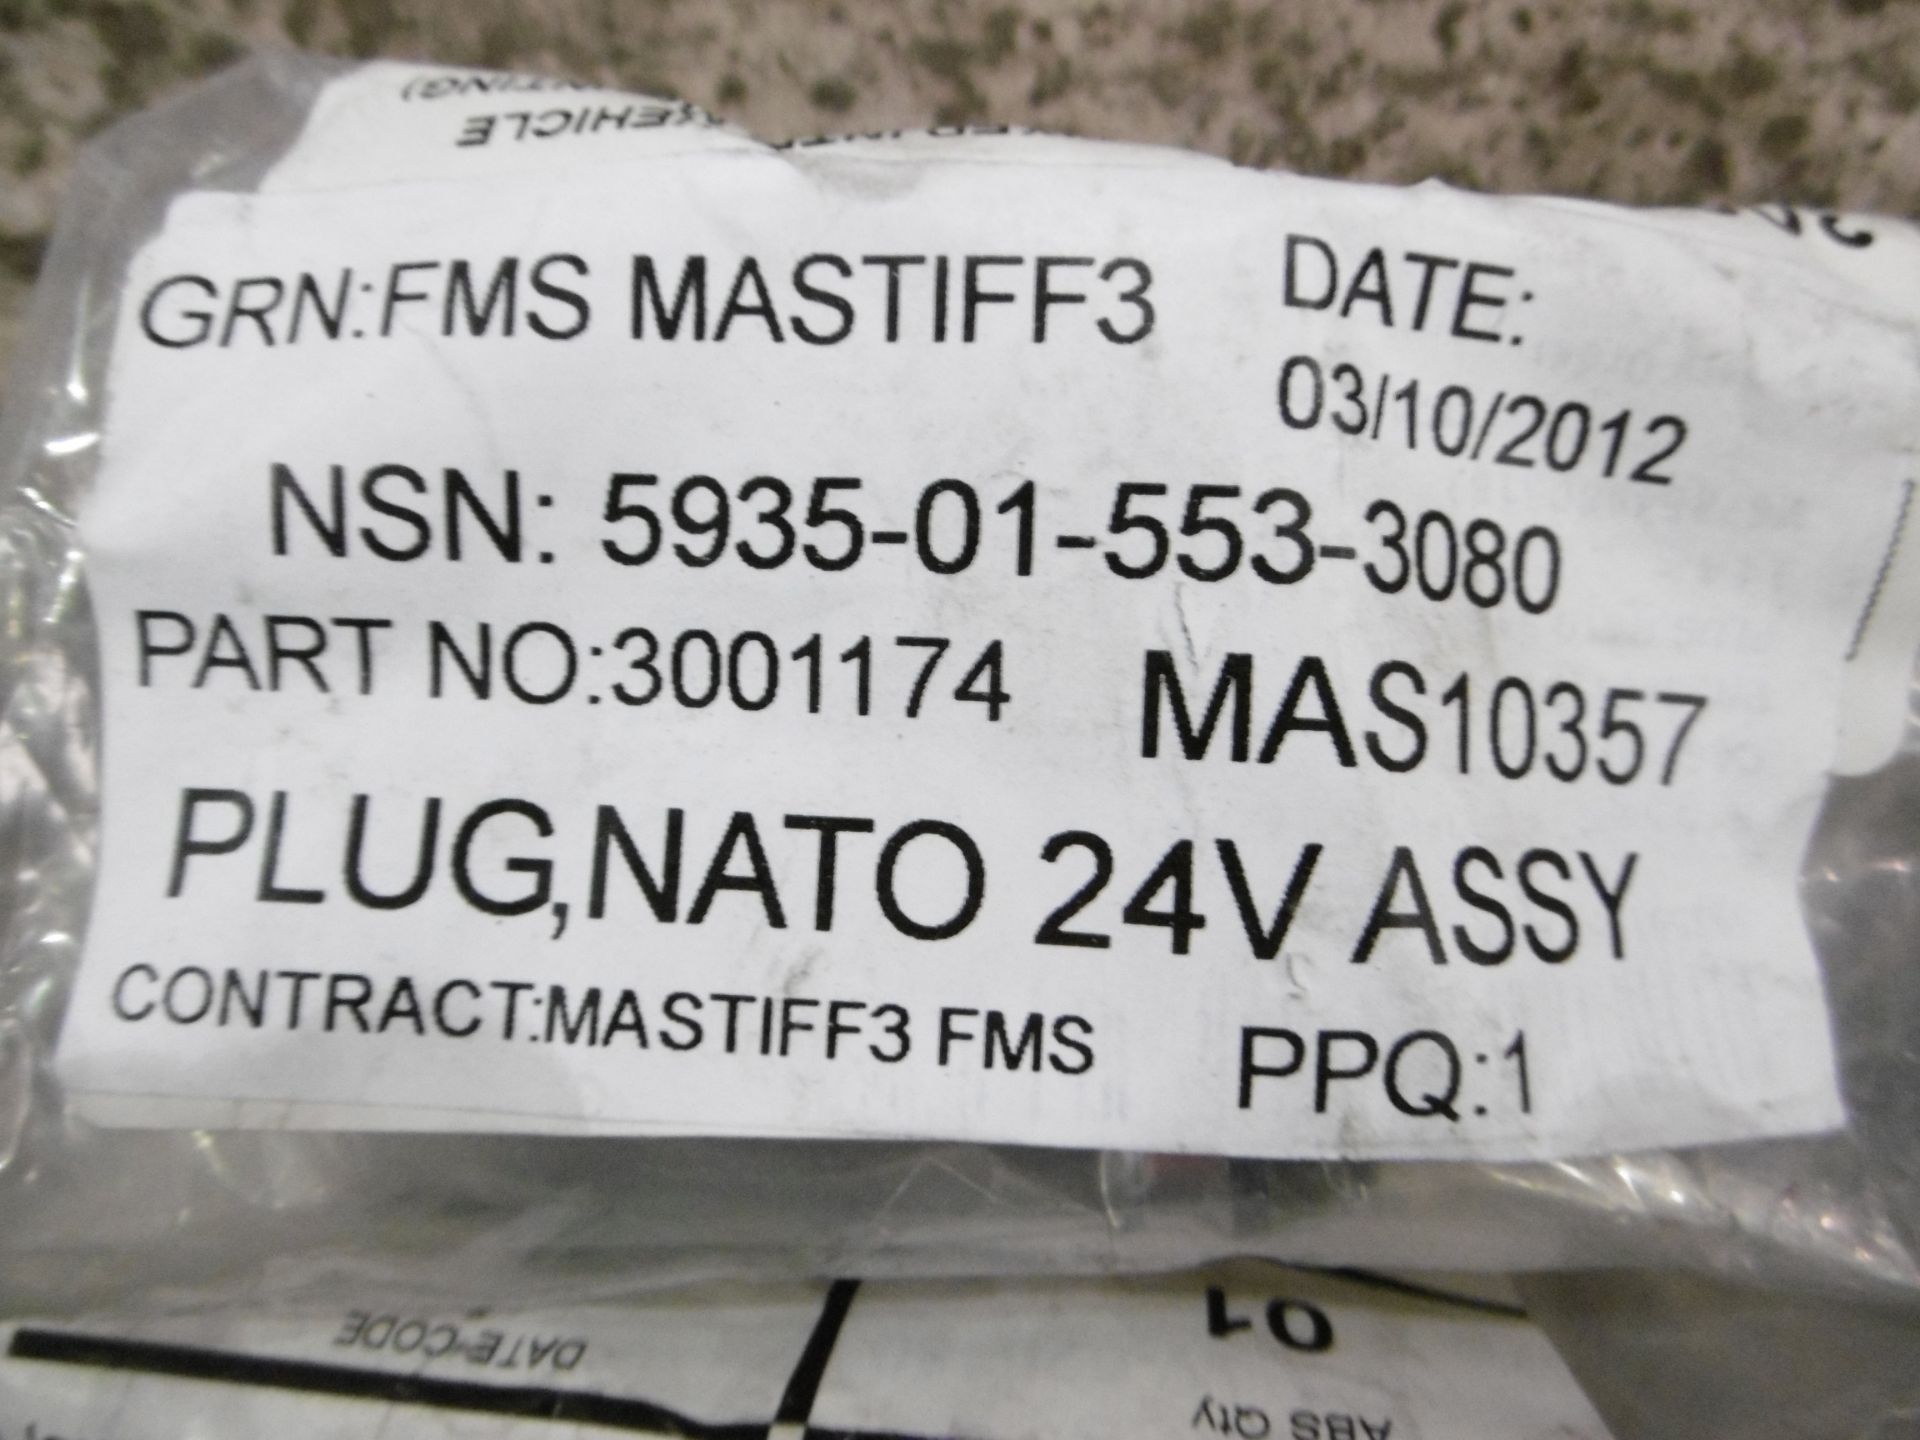 6 x NATO 24v Plug Assys - Image 2 of 6